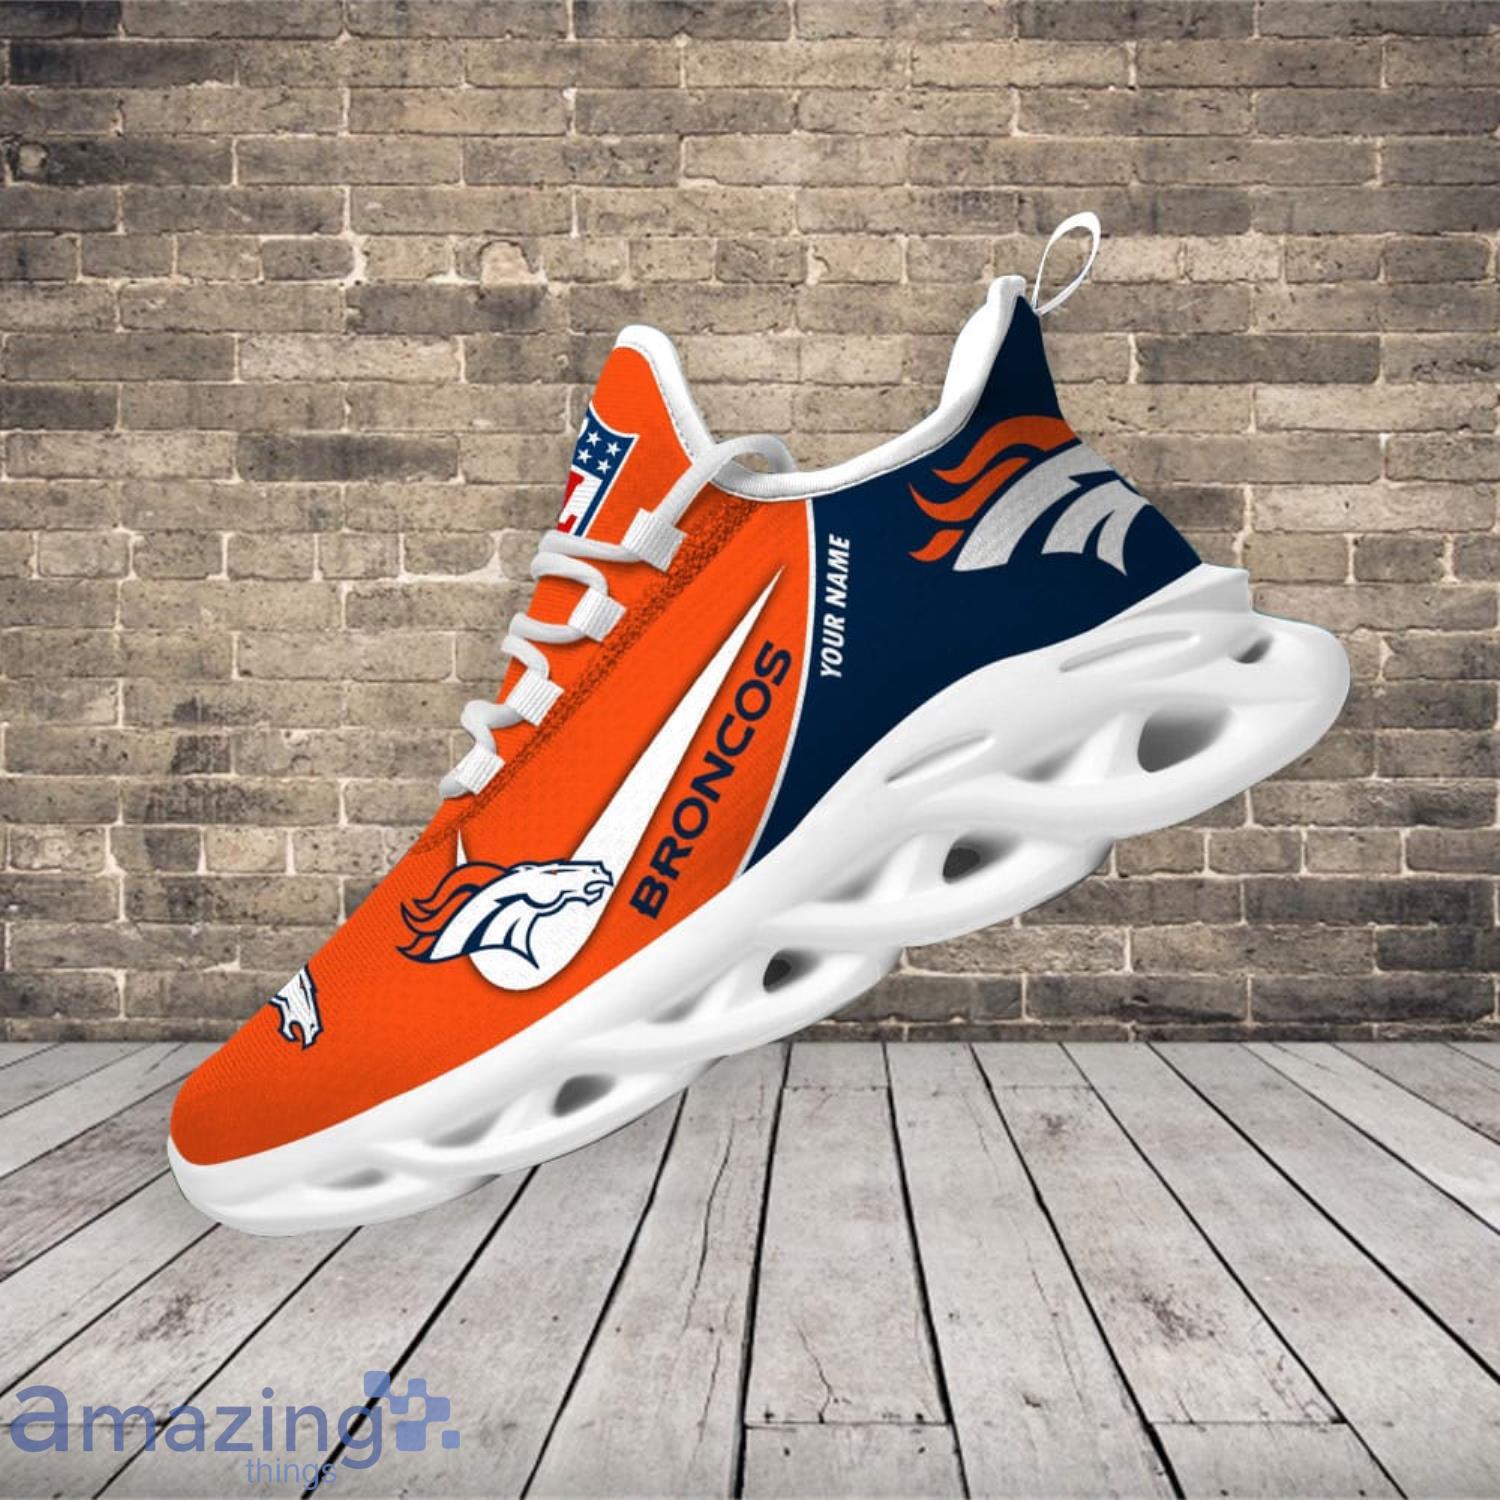 Alex Forsyth Women's Nike Orange Denver Broncos Custom Game Jersey Size: Small